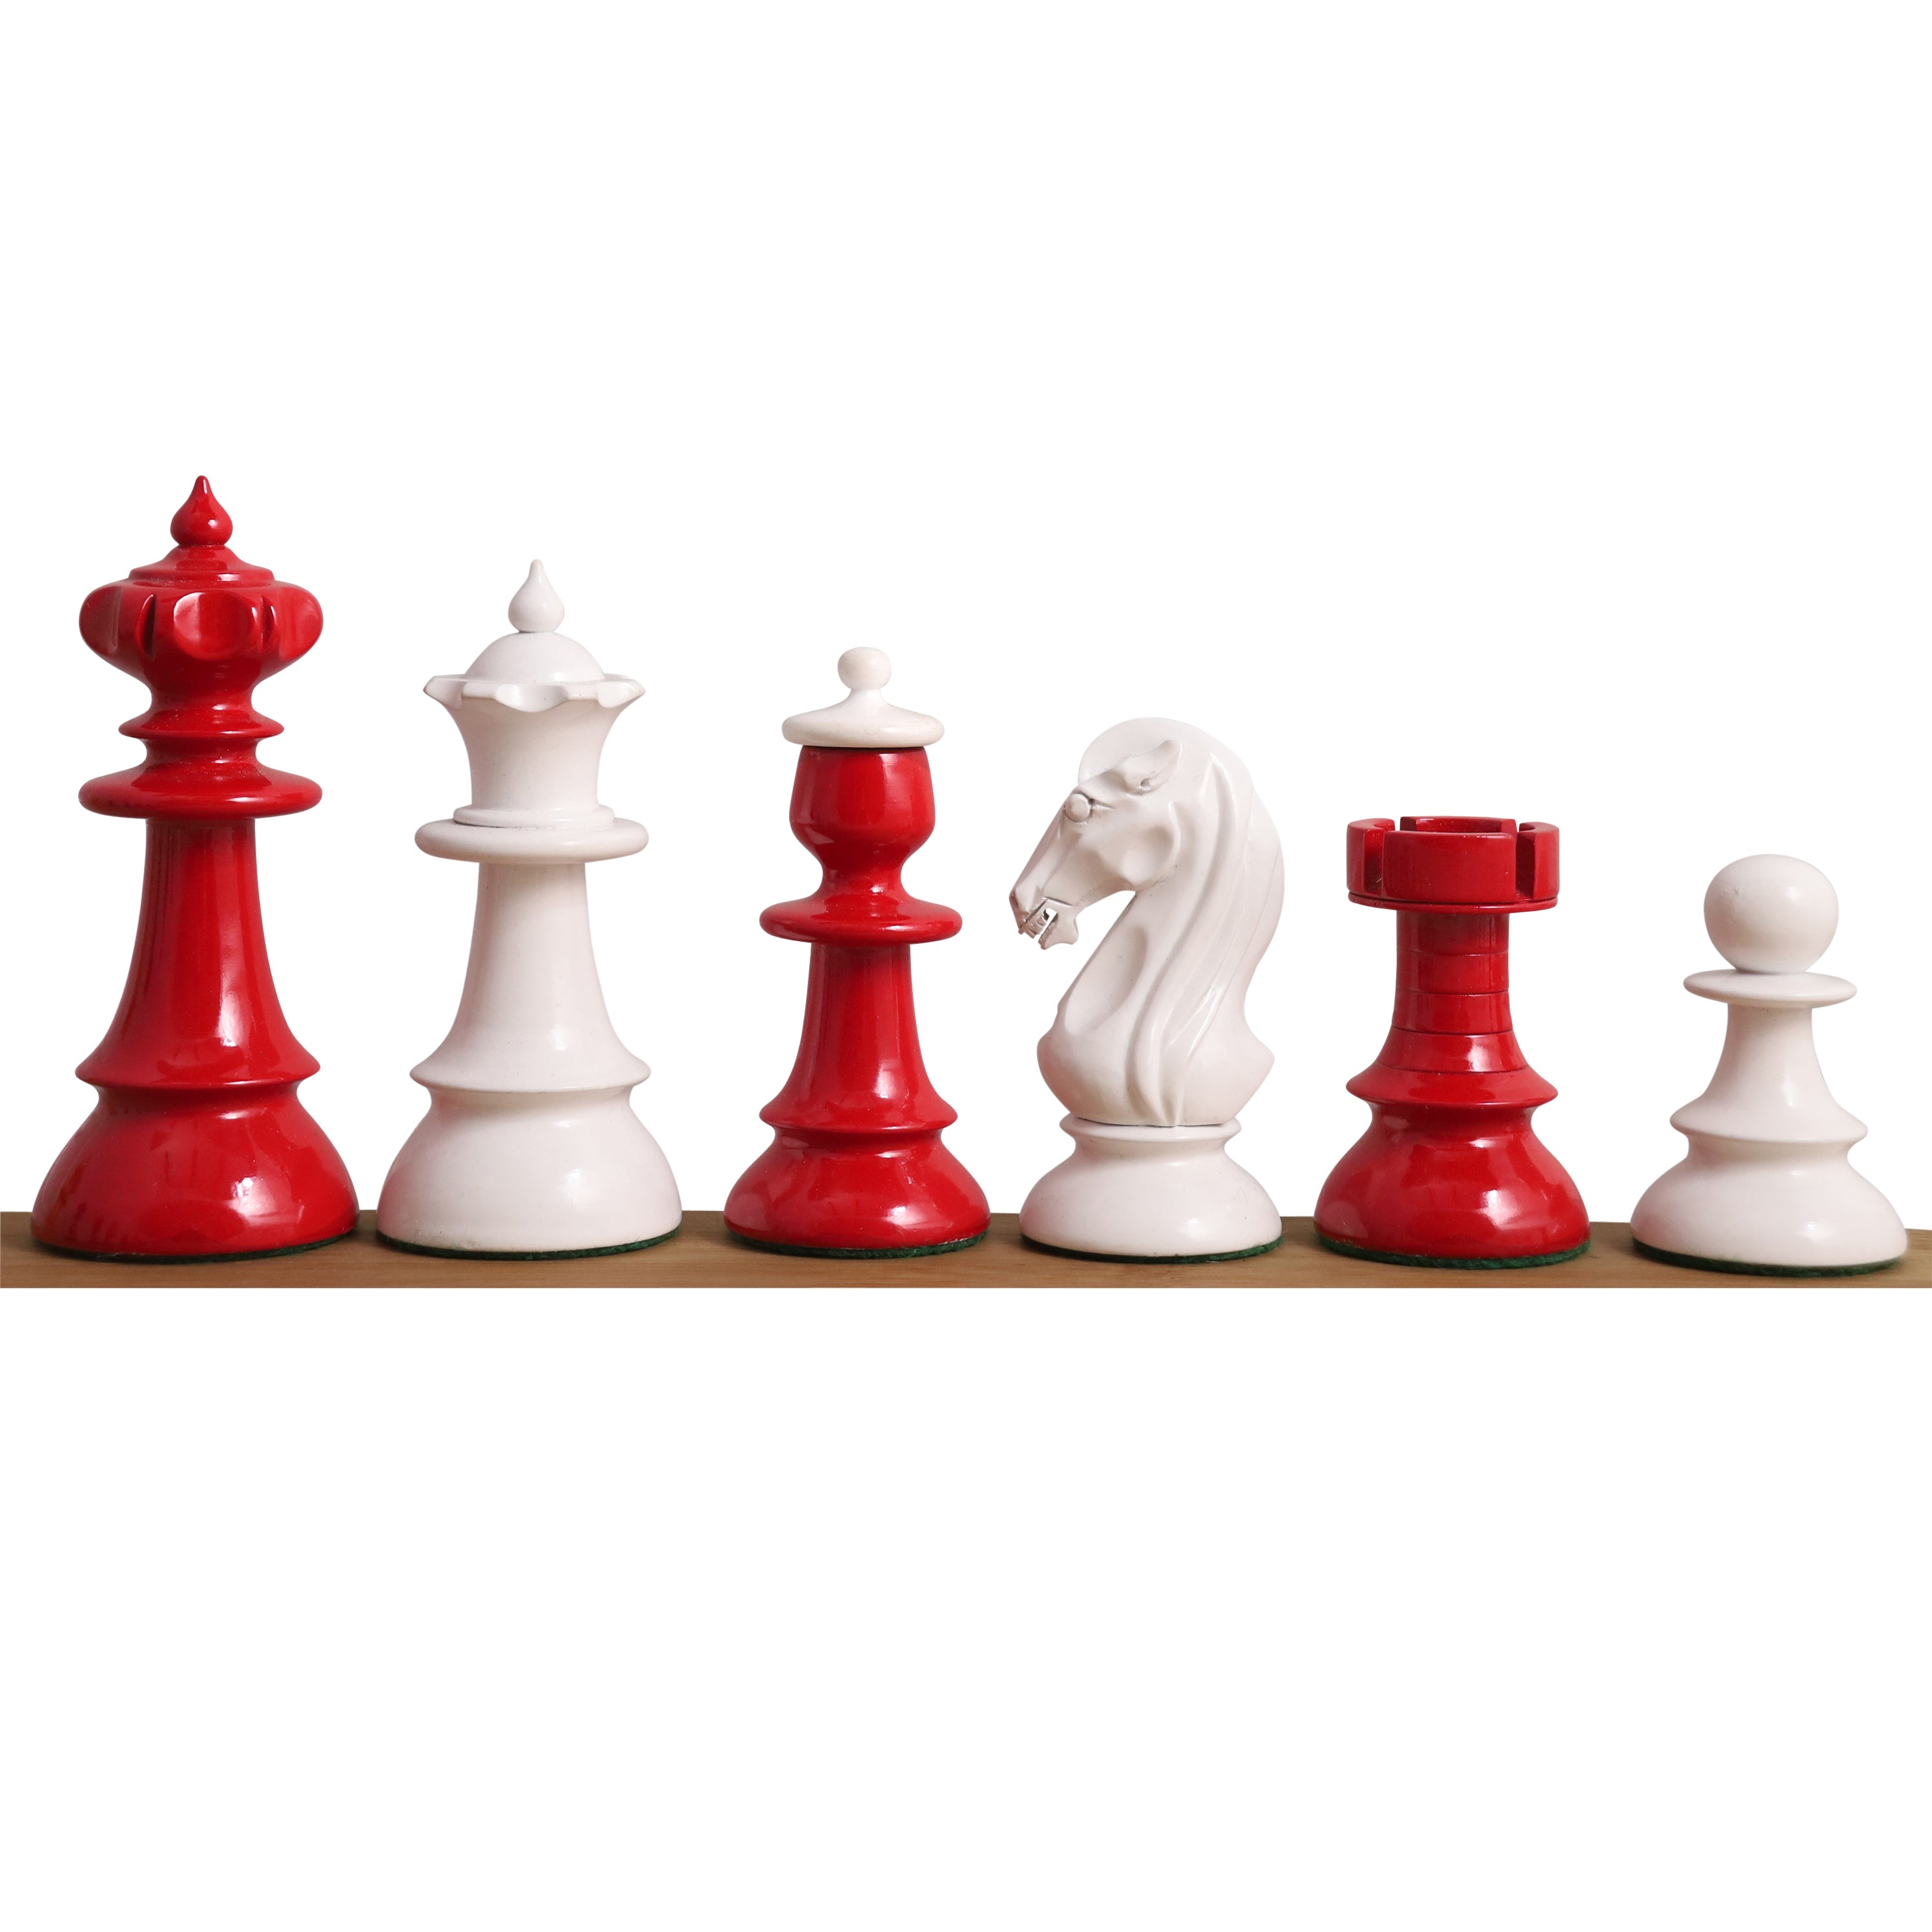 Vienna Game - The Chess Website